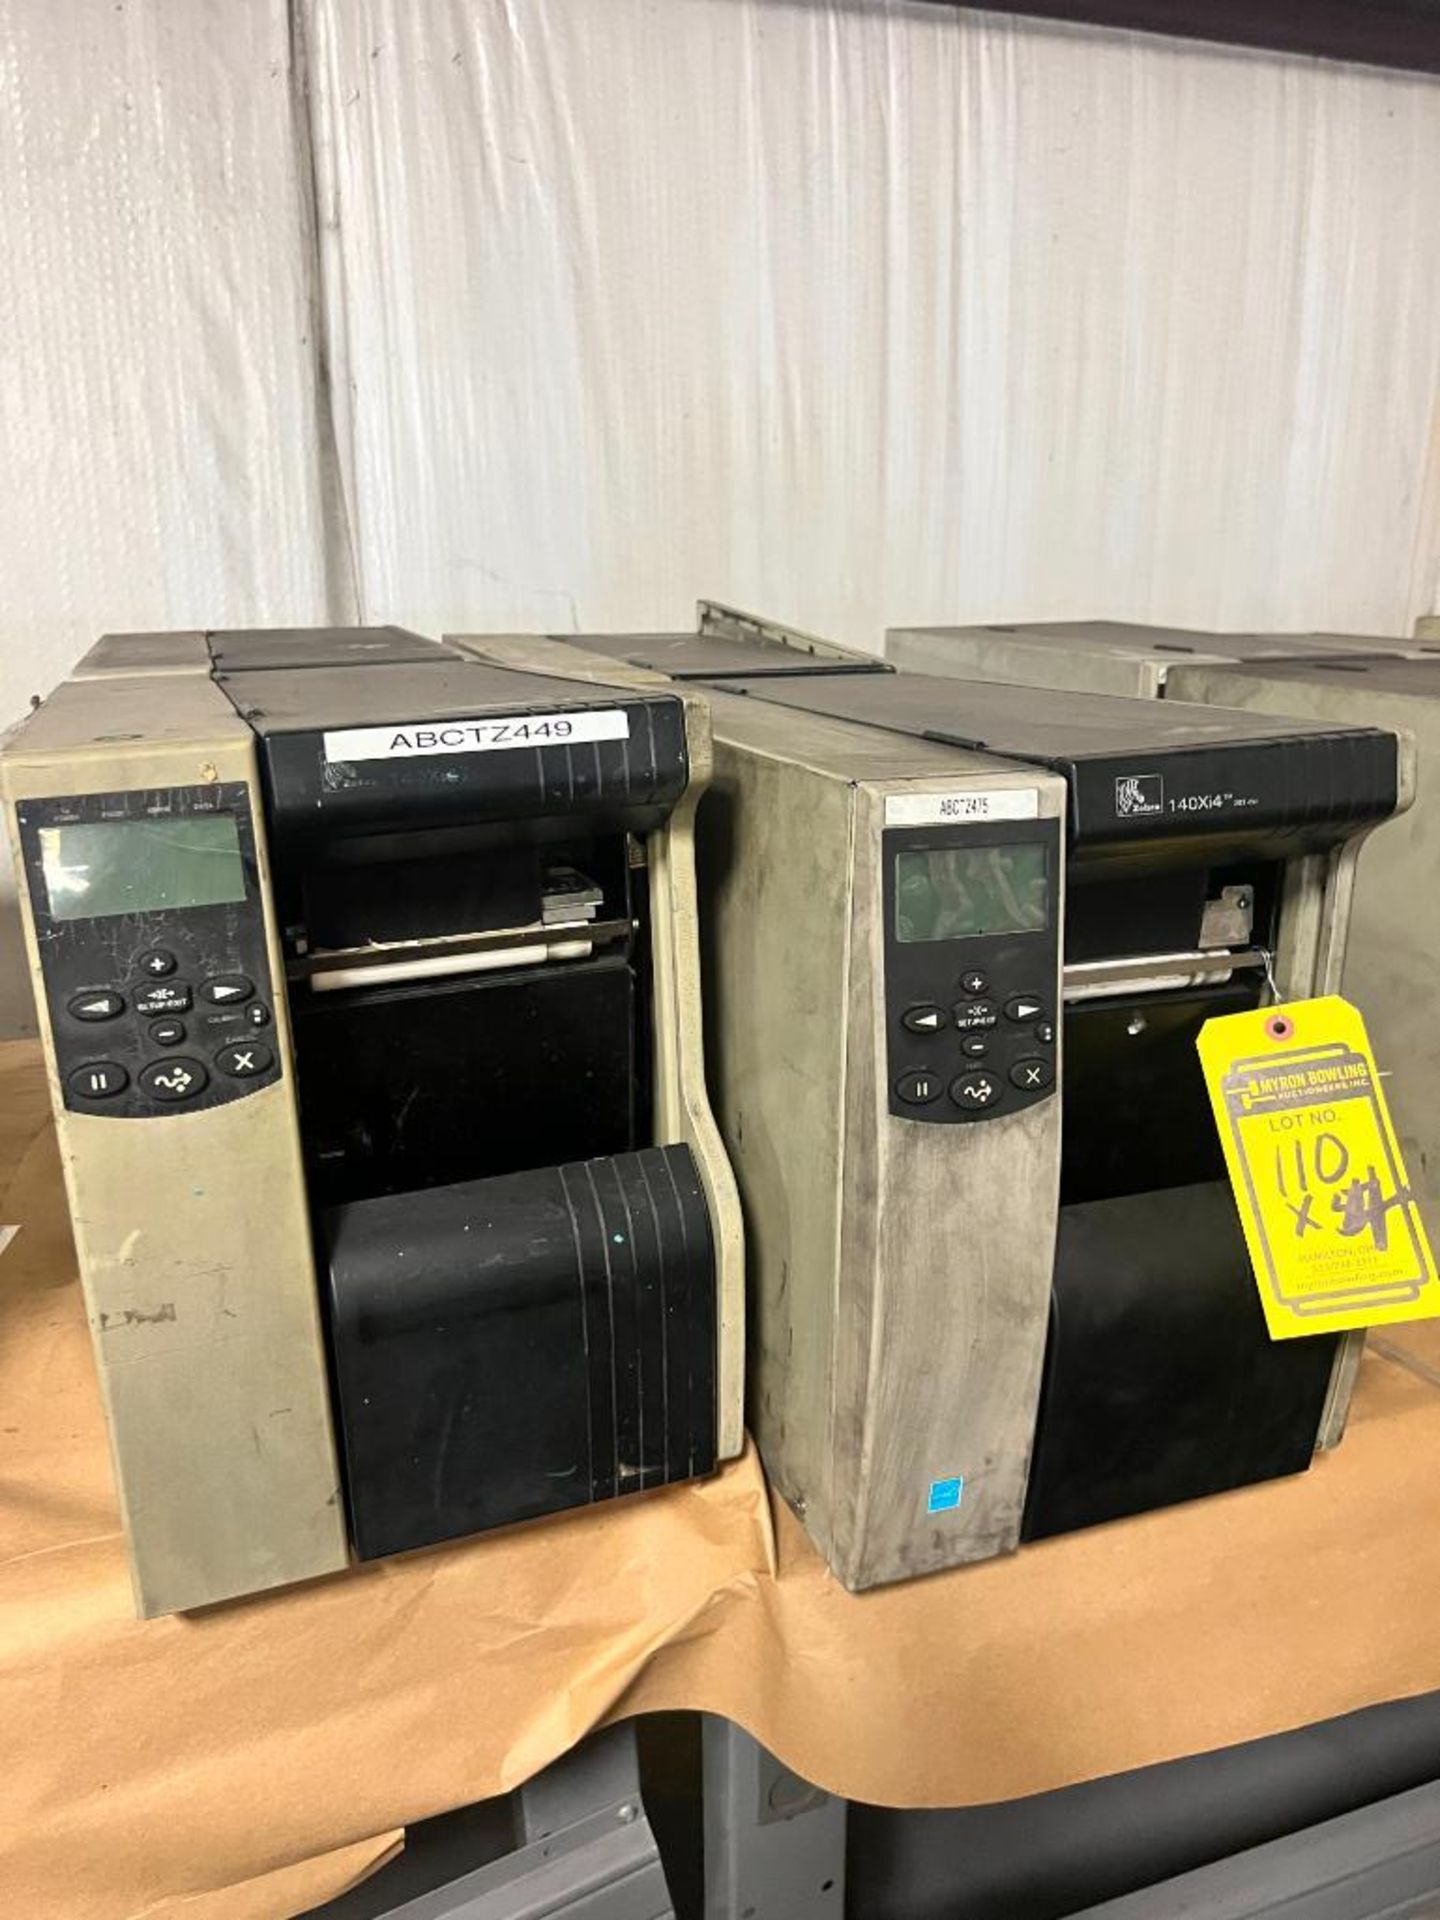 (4x) Zebra Printers, 140XI4